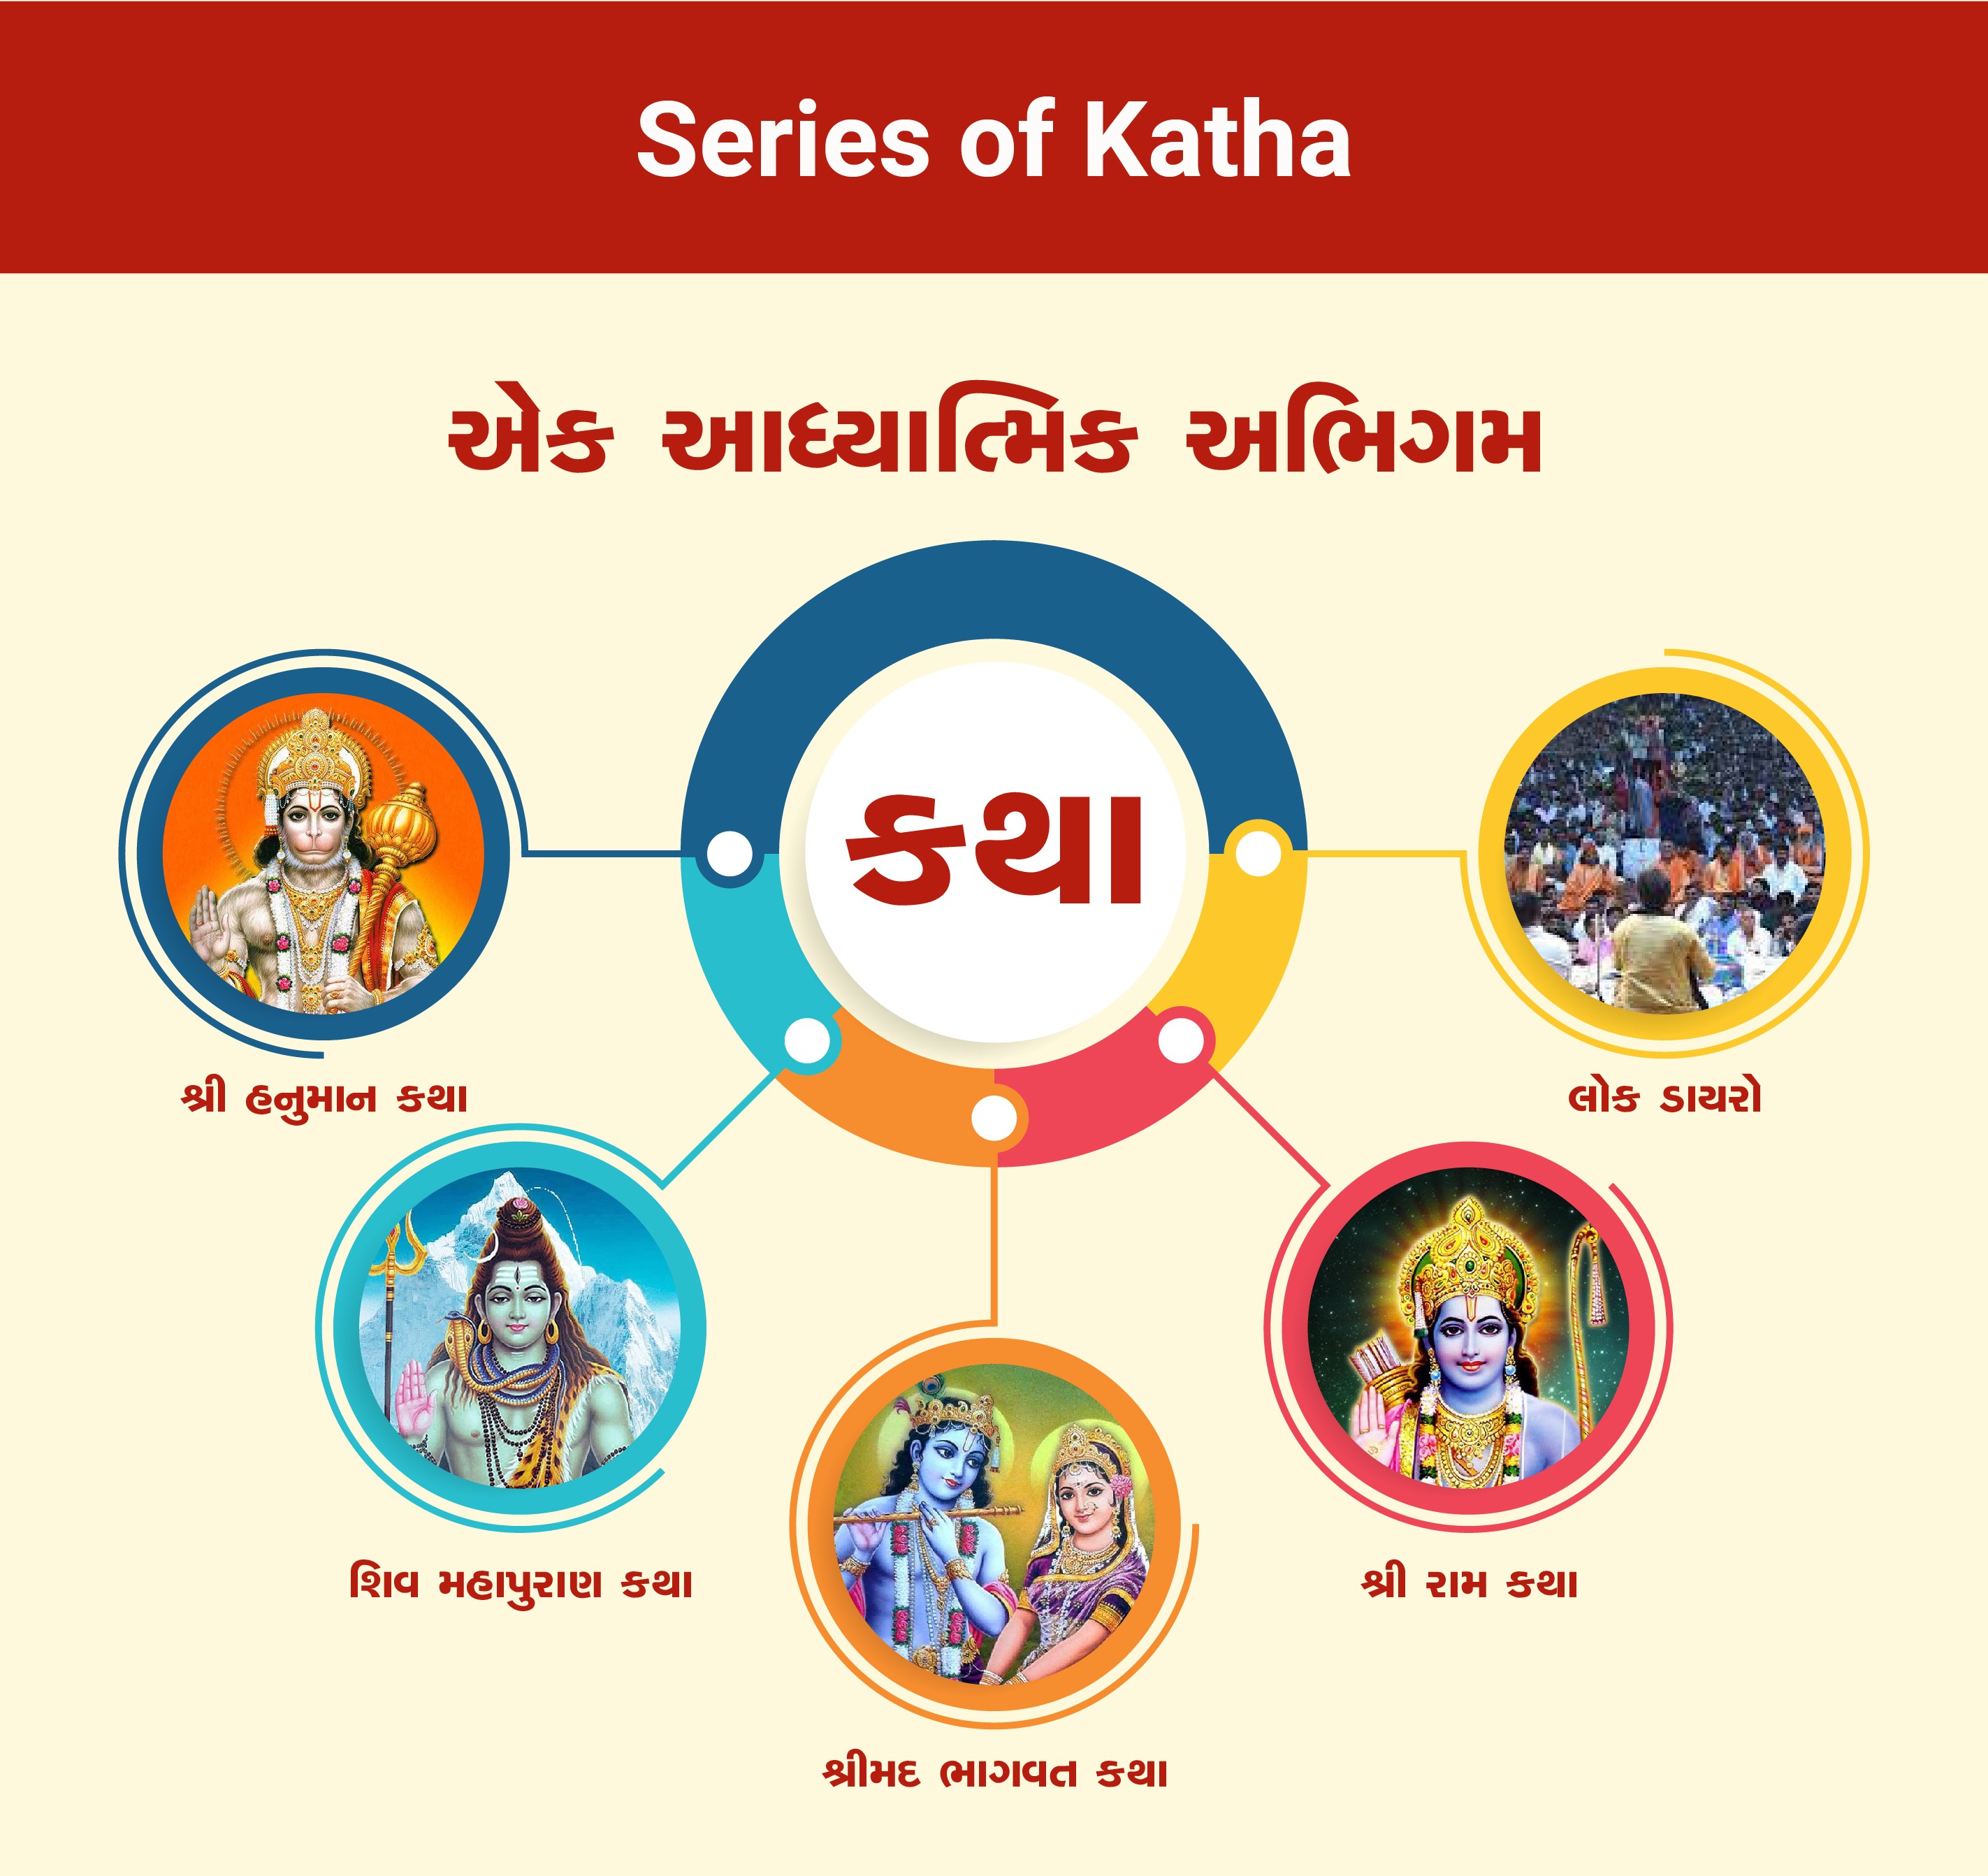 Series of Katha